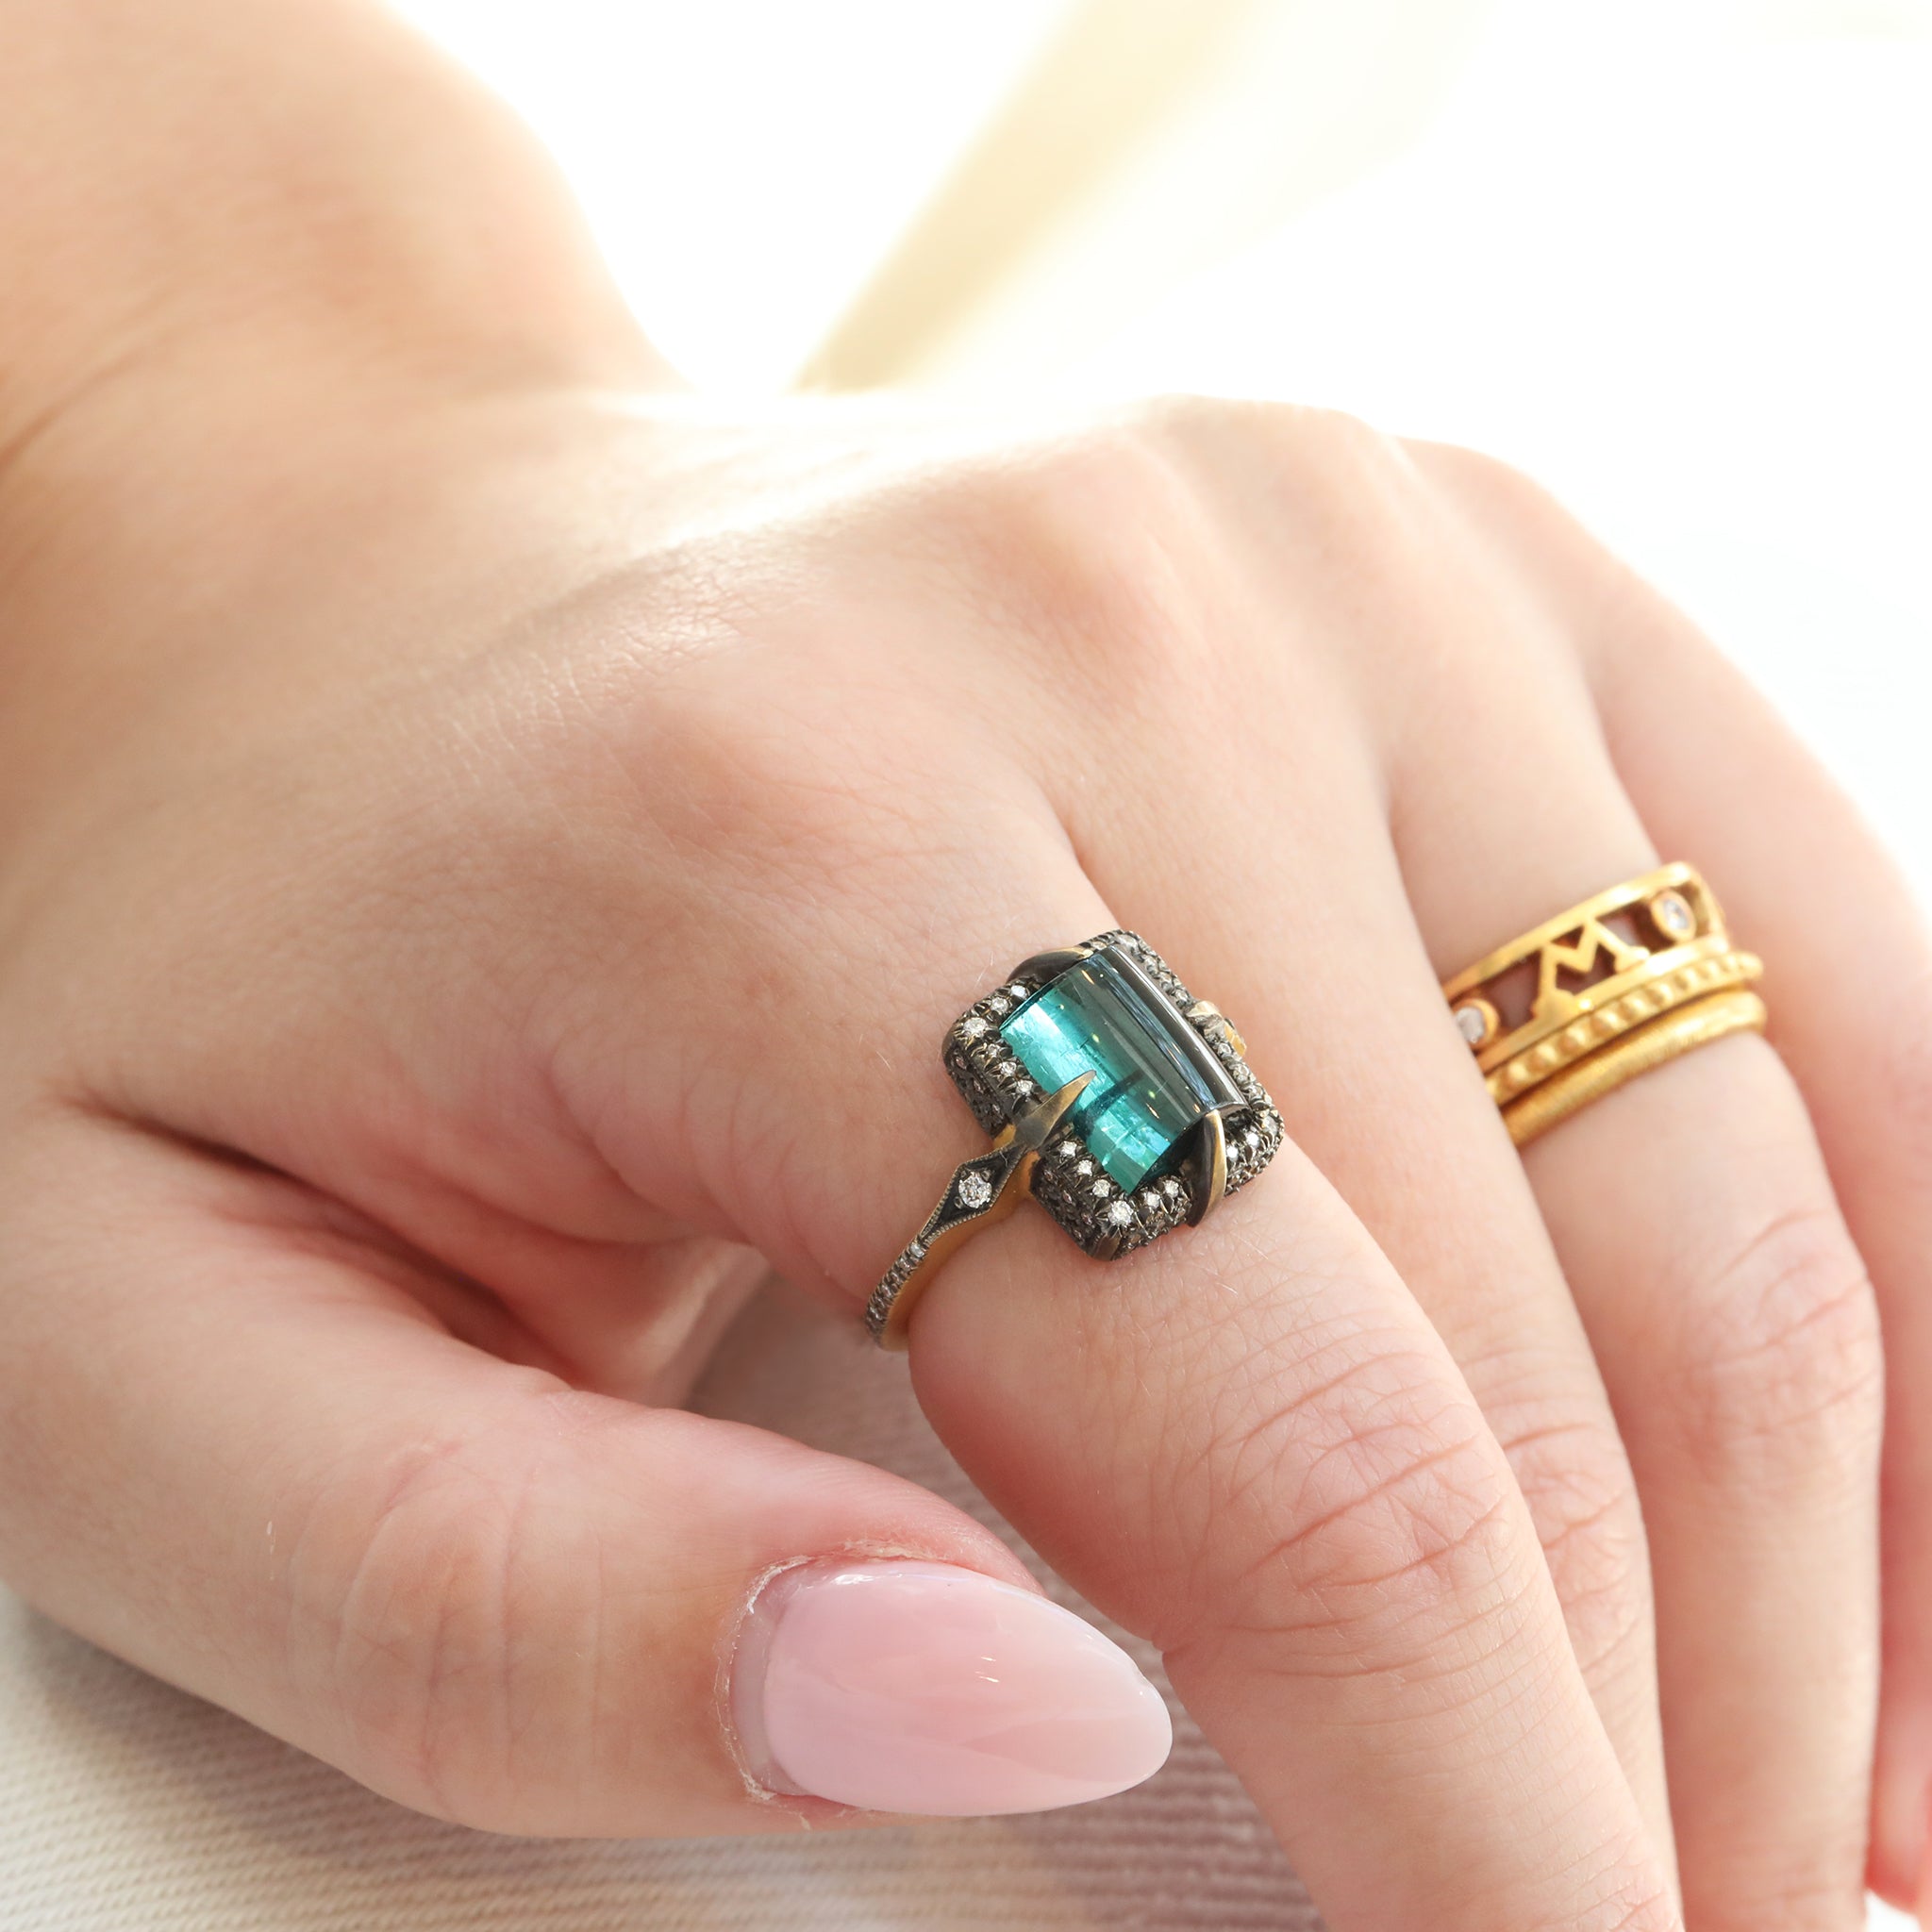 Blackened 22K Gold & Diamond "Venus" Ring with Blue-Green Tourmaline Center - Peridot Fine Jewelry - Cathy Waterman